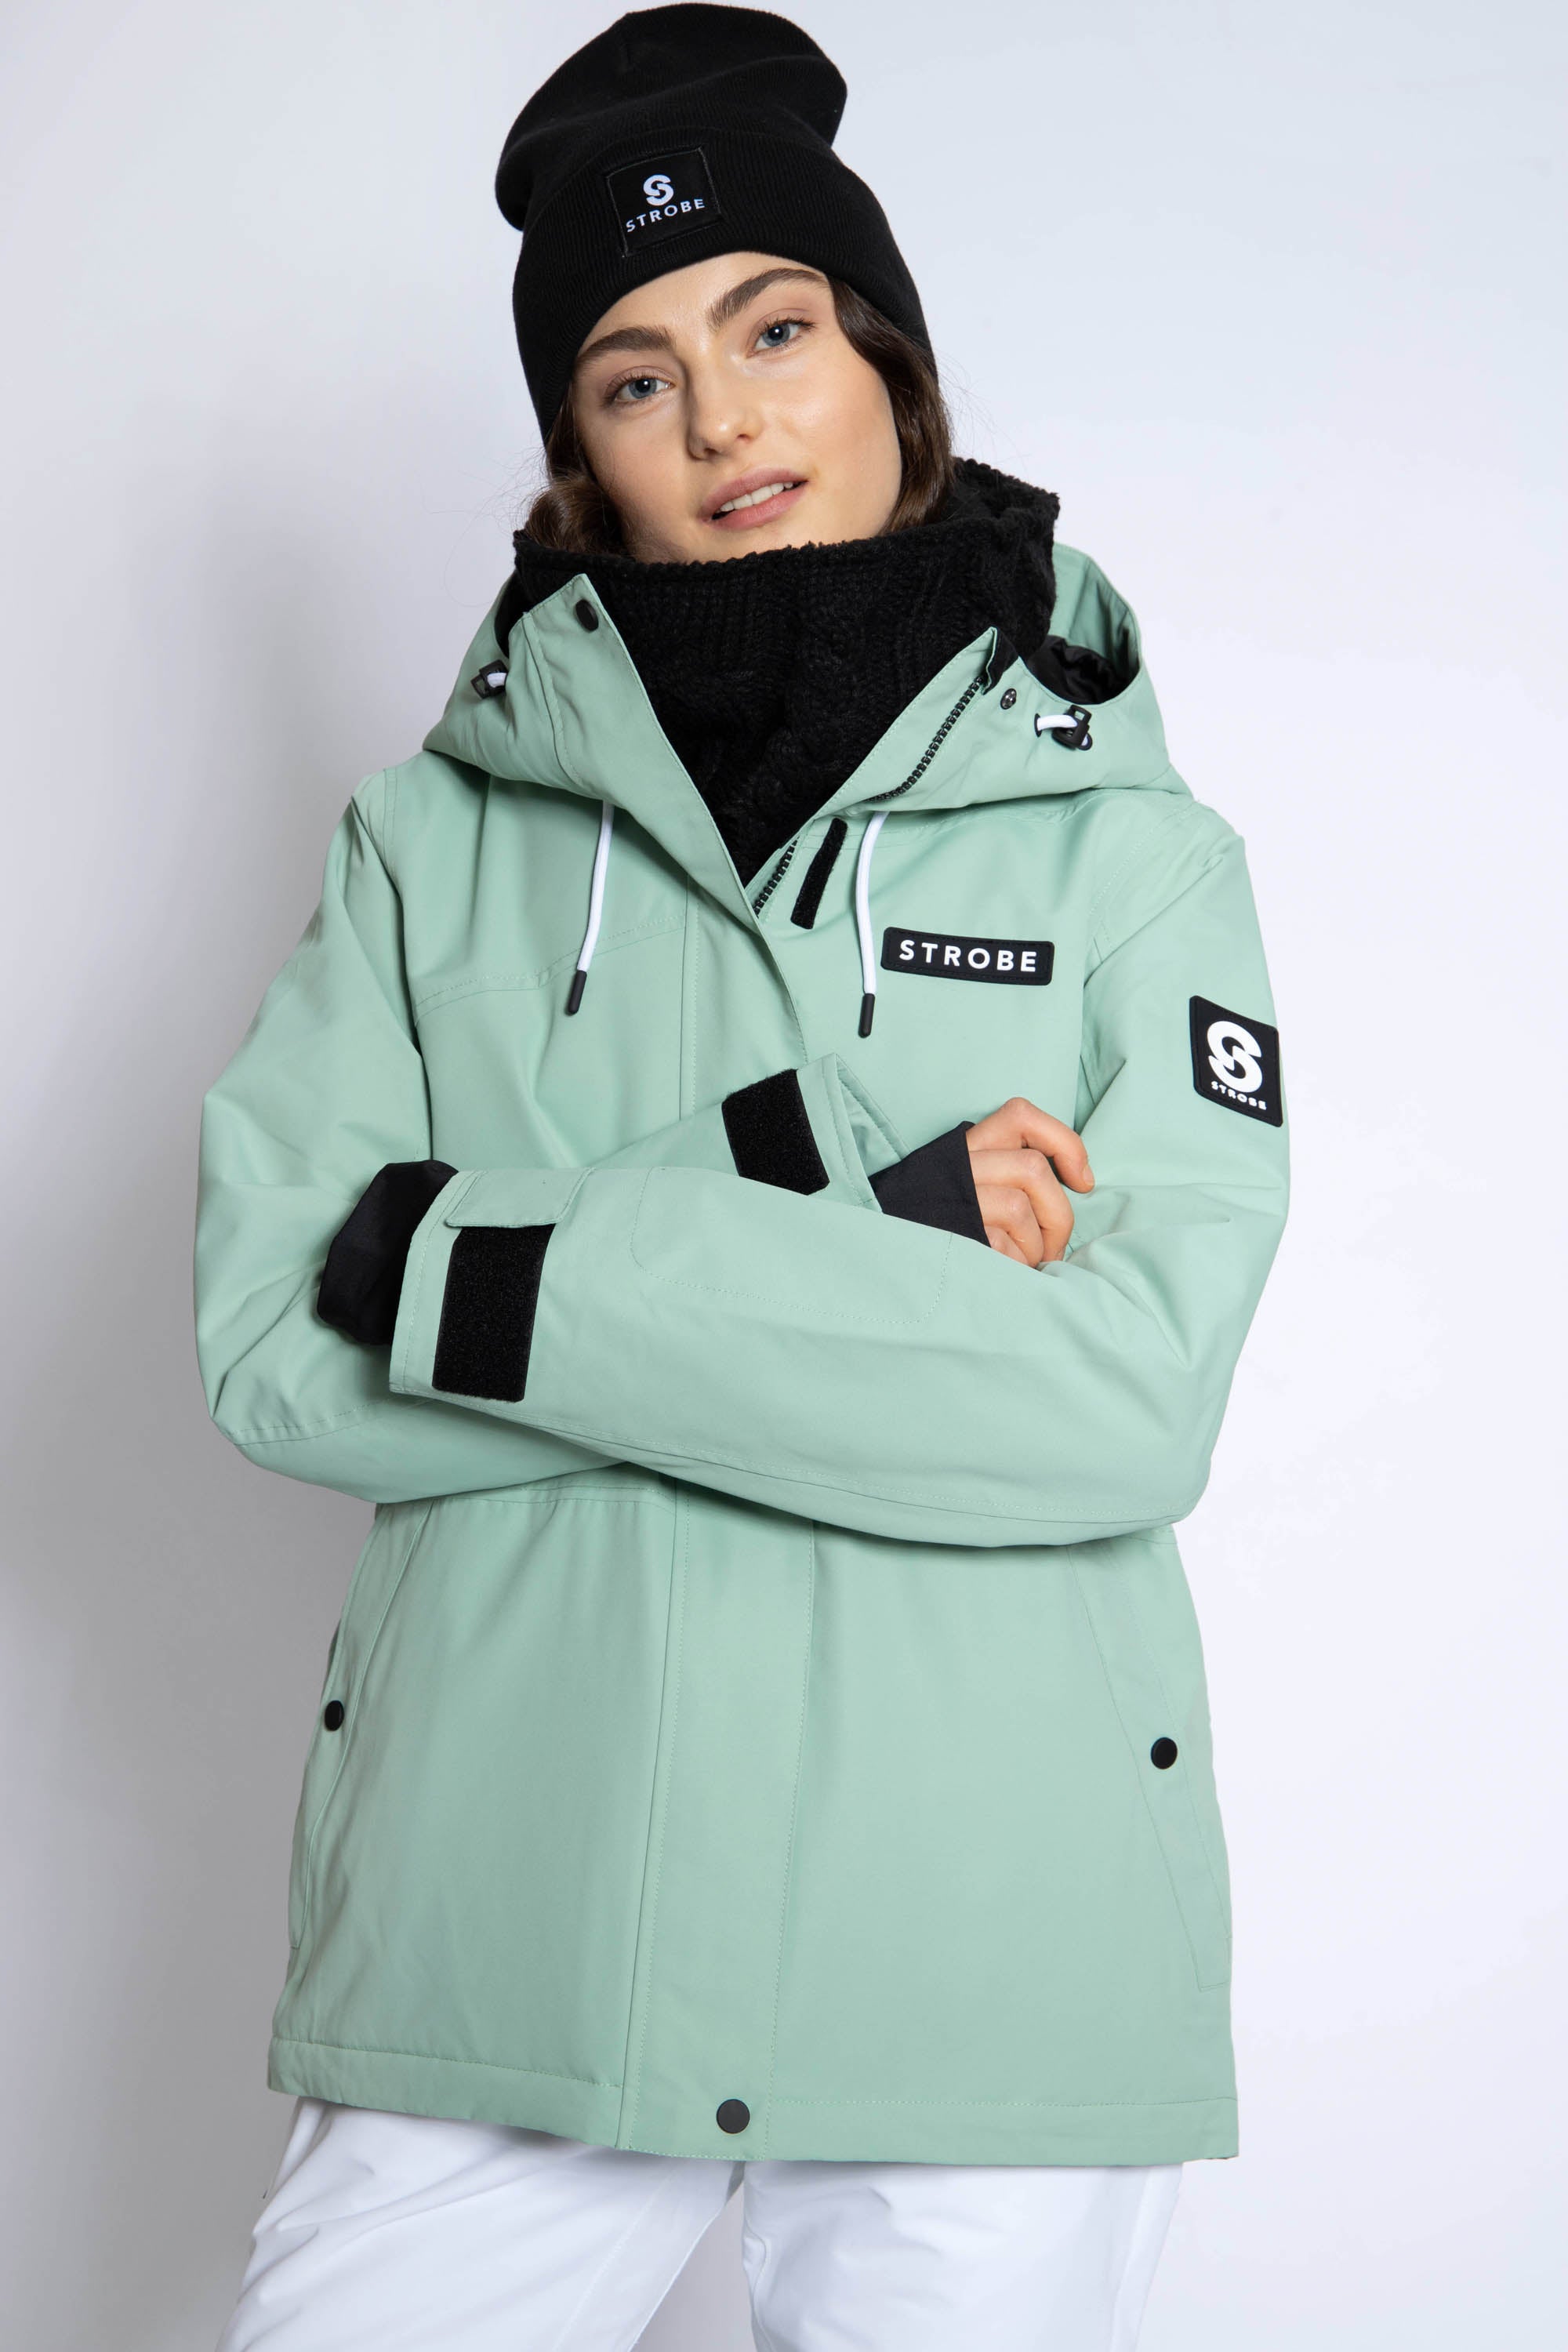 Boven hoofd en schouder Belichamen Verrassend genoeg Aura Ski Jacket Dusty Green - Women's - Strobe